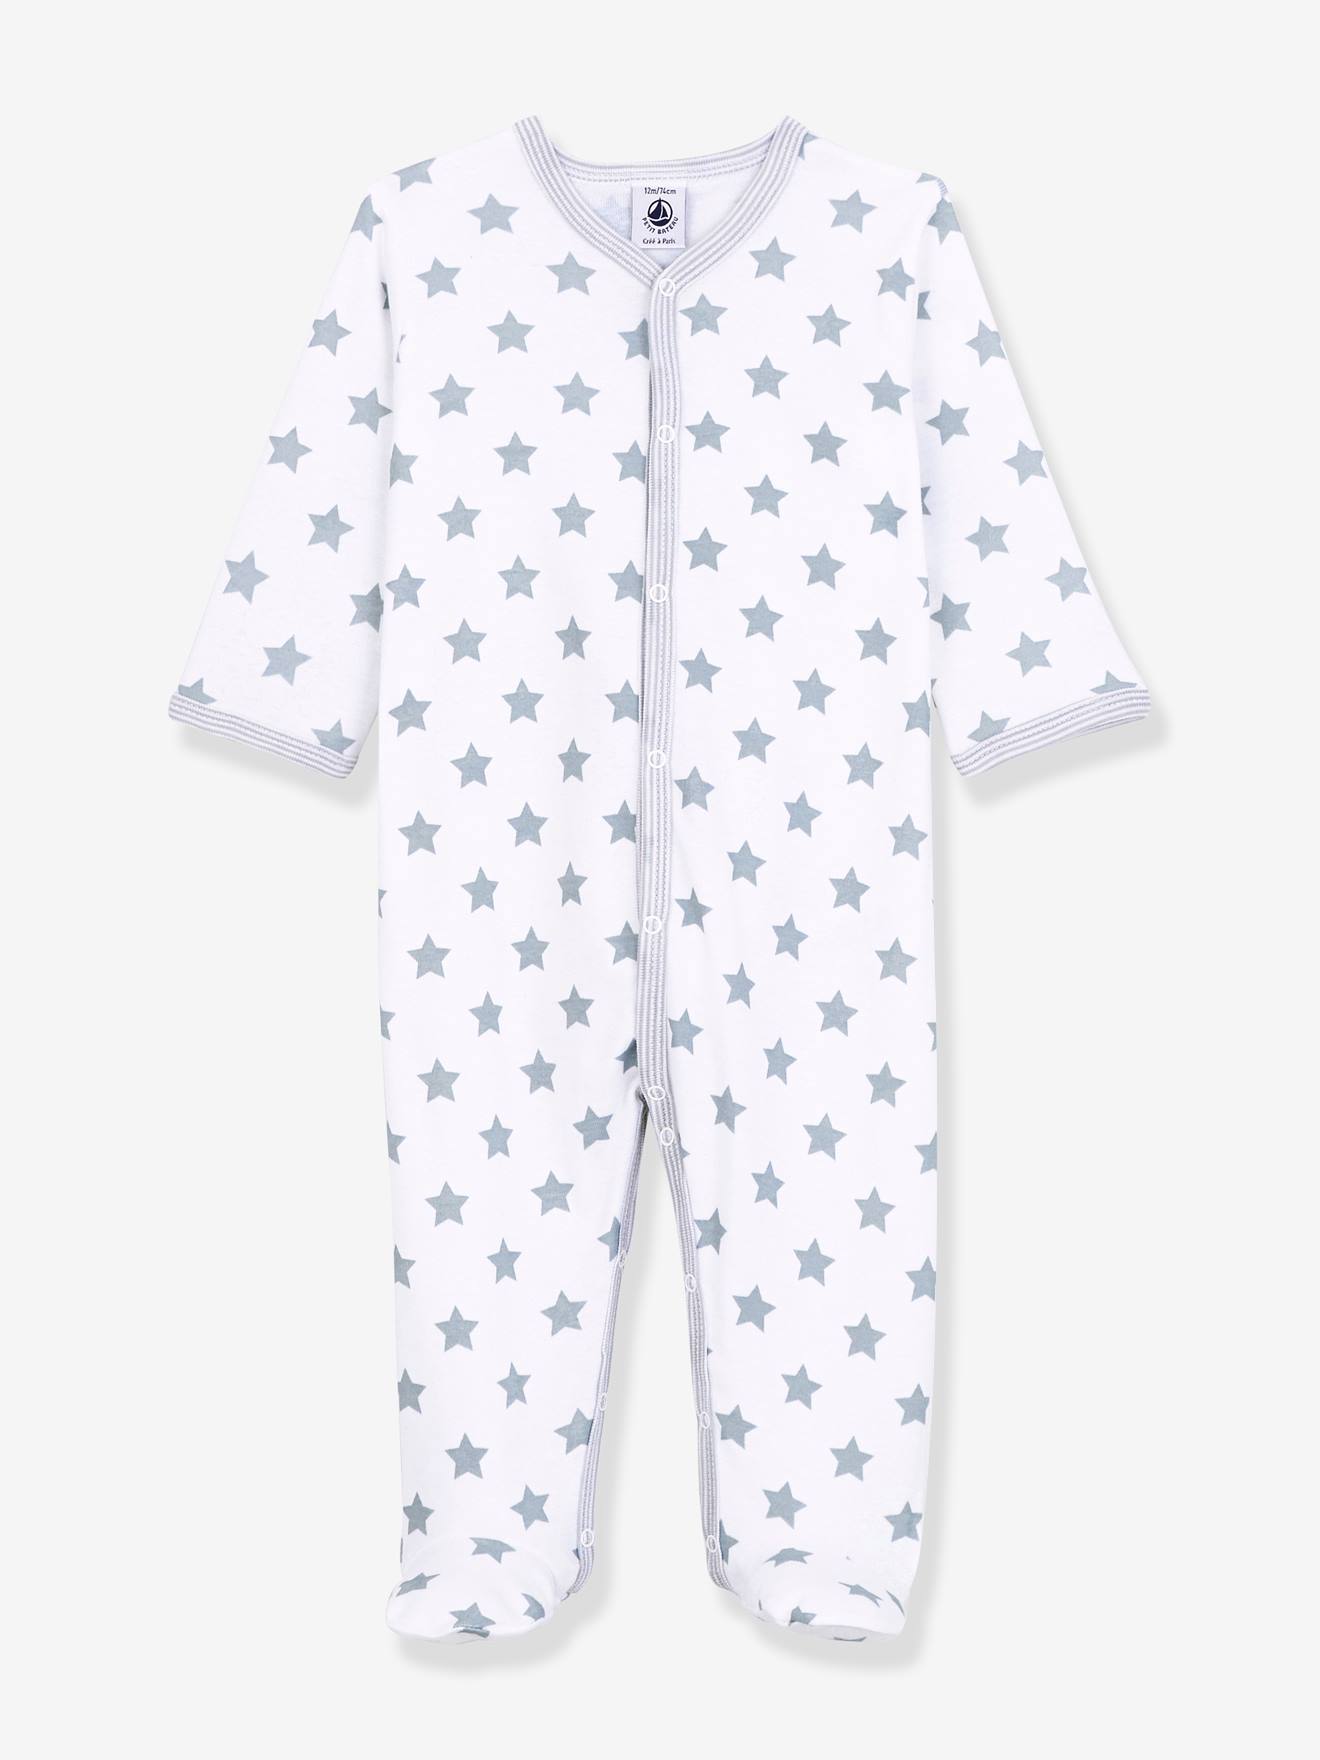 Pelele para Chicos y Chicas Pijama Pijama para bebé Body para bebé Mono de algodón Ropa de Dormir Unisex para bebé 